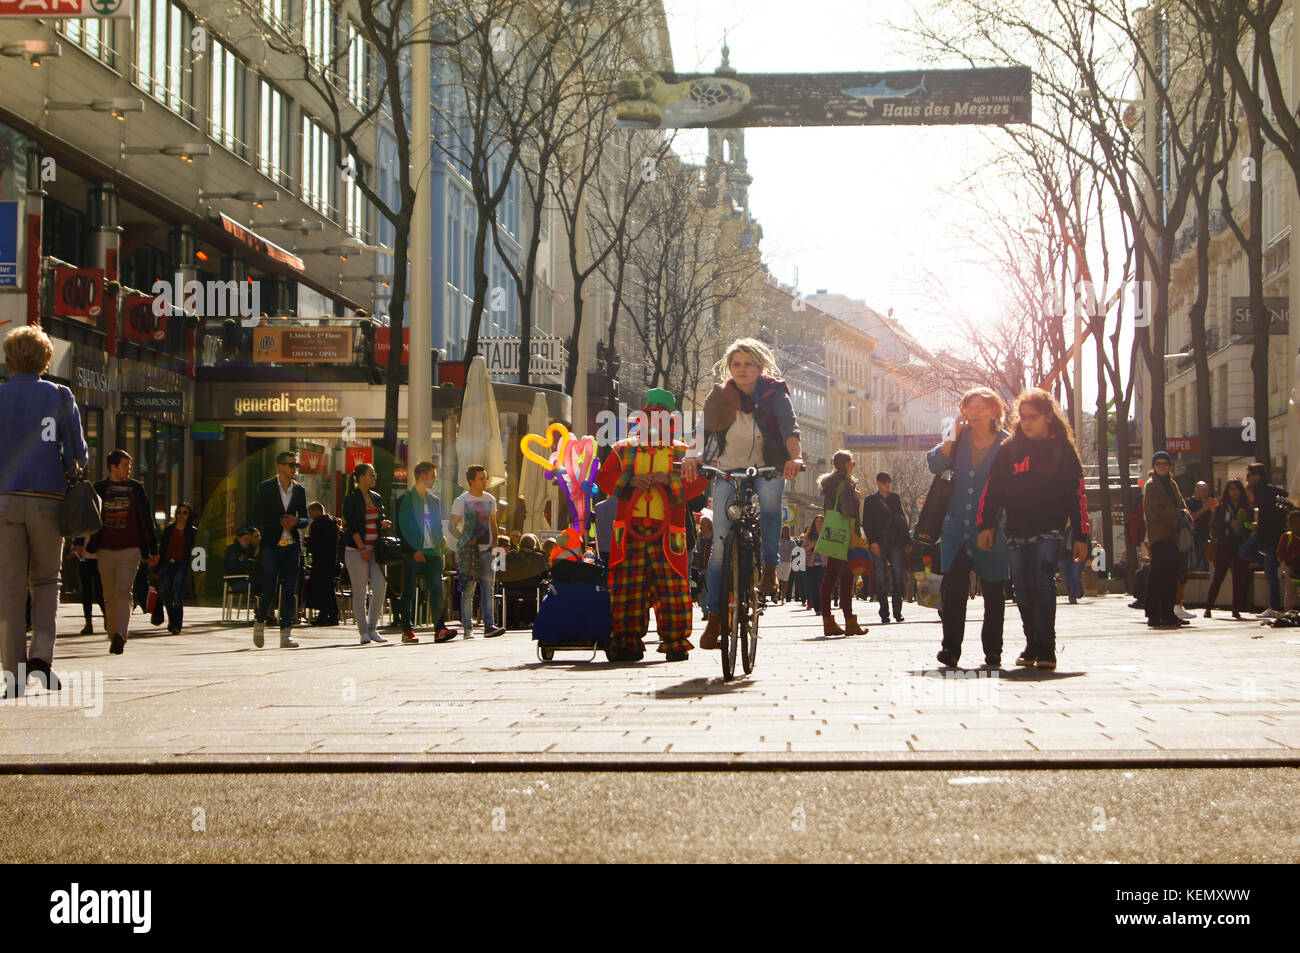 La via principale dello shopping mariahilfer street, vienna austria ottobre 20.2015 Foto Stock